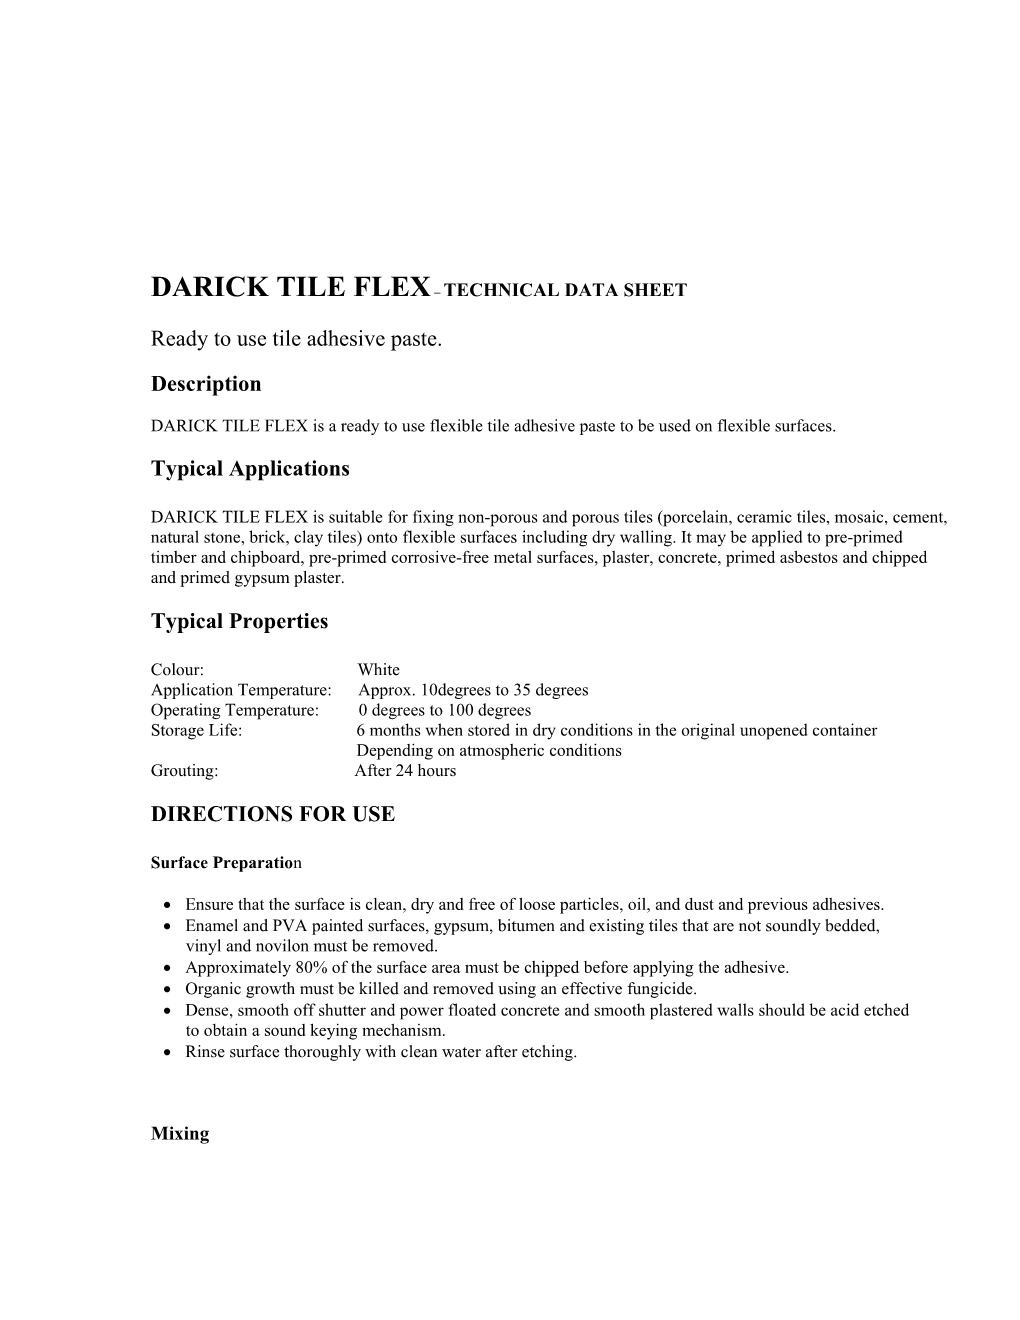 Darick Tile Flex Technical Data Sheet